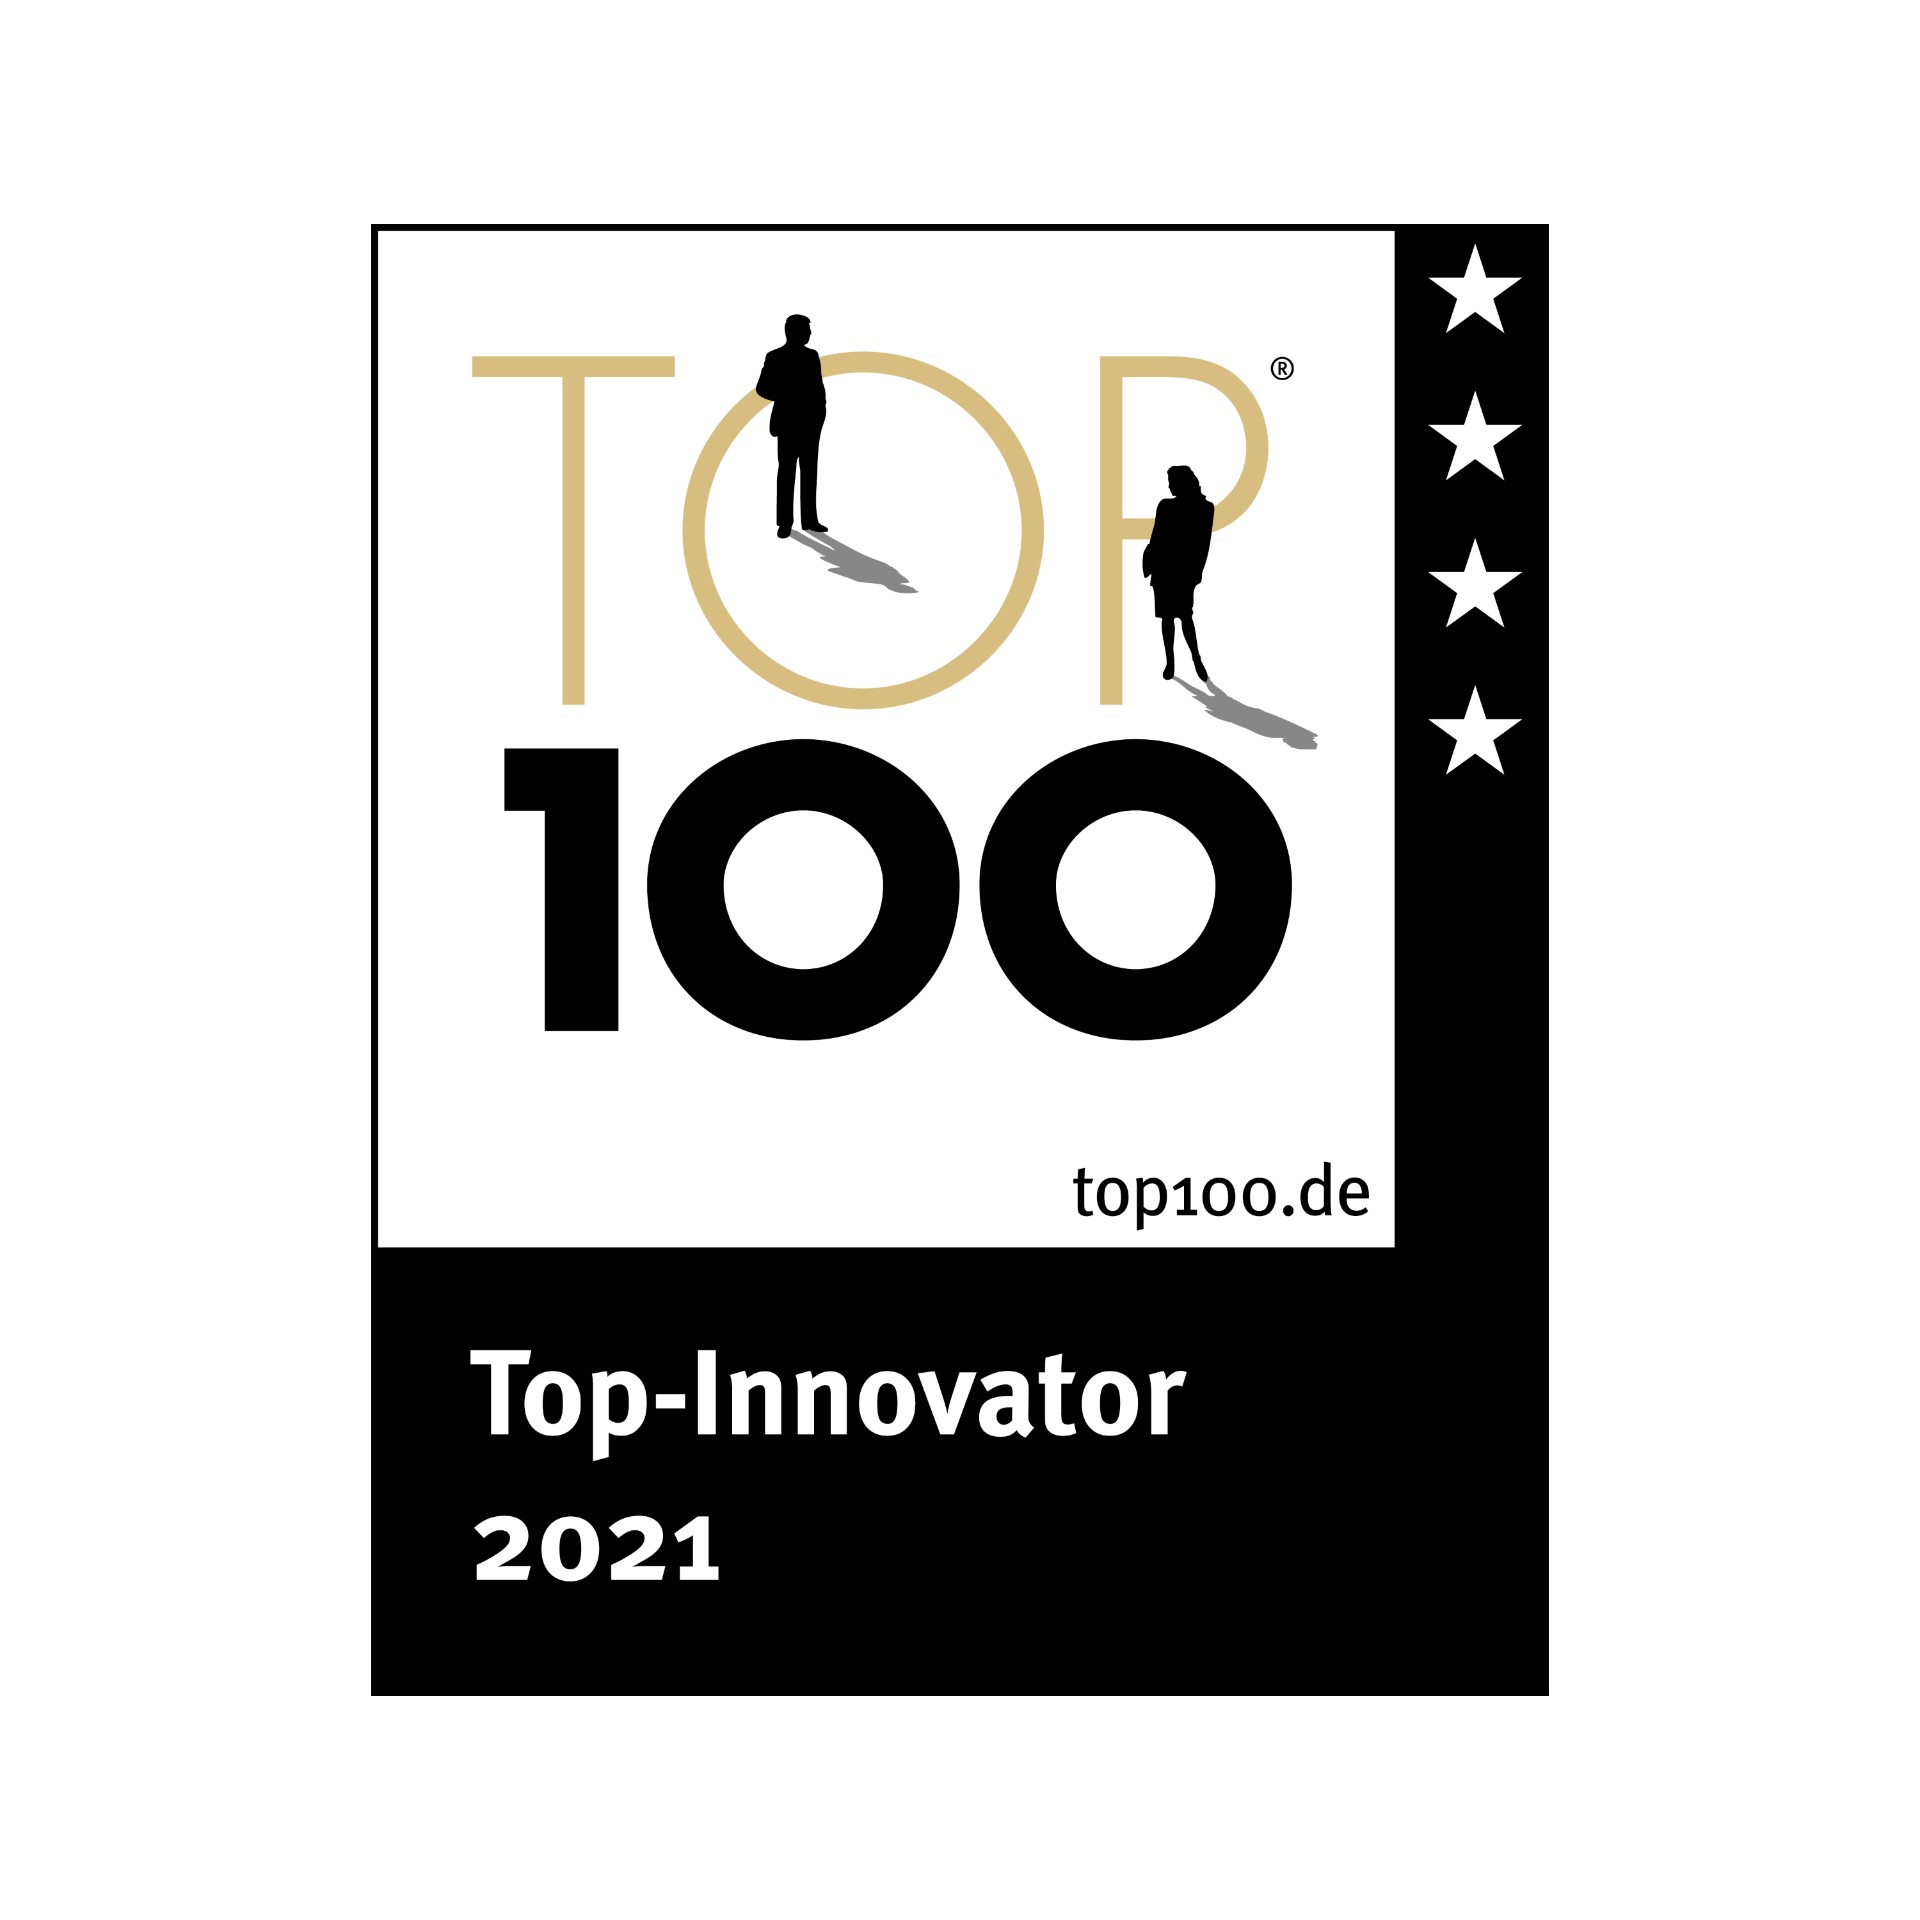 KPS receives Top Innovator 2021 award